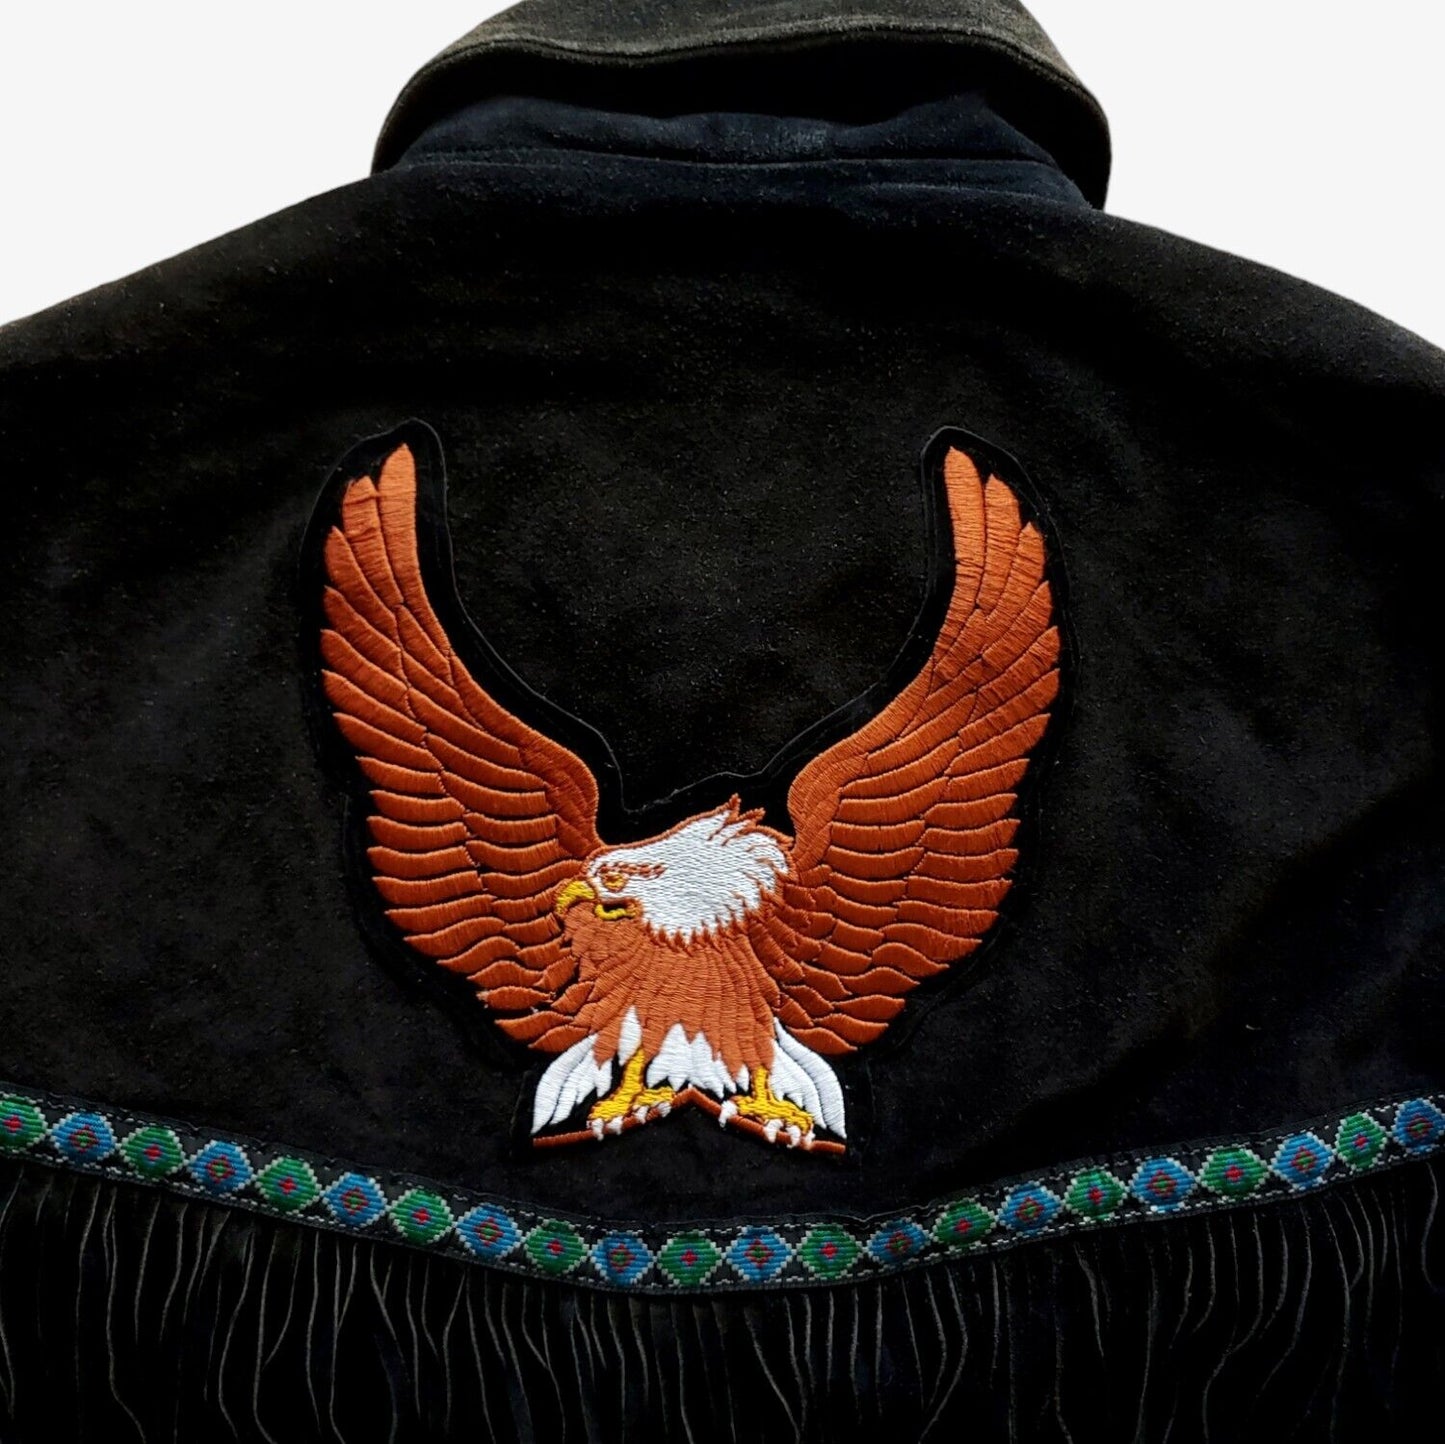 Vintage 1980s Western Fringe Jacket With Embroidered Eagle Motif - Casspios Dream